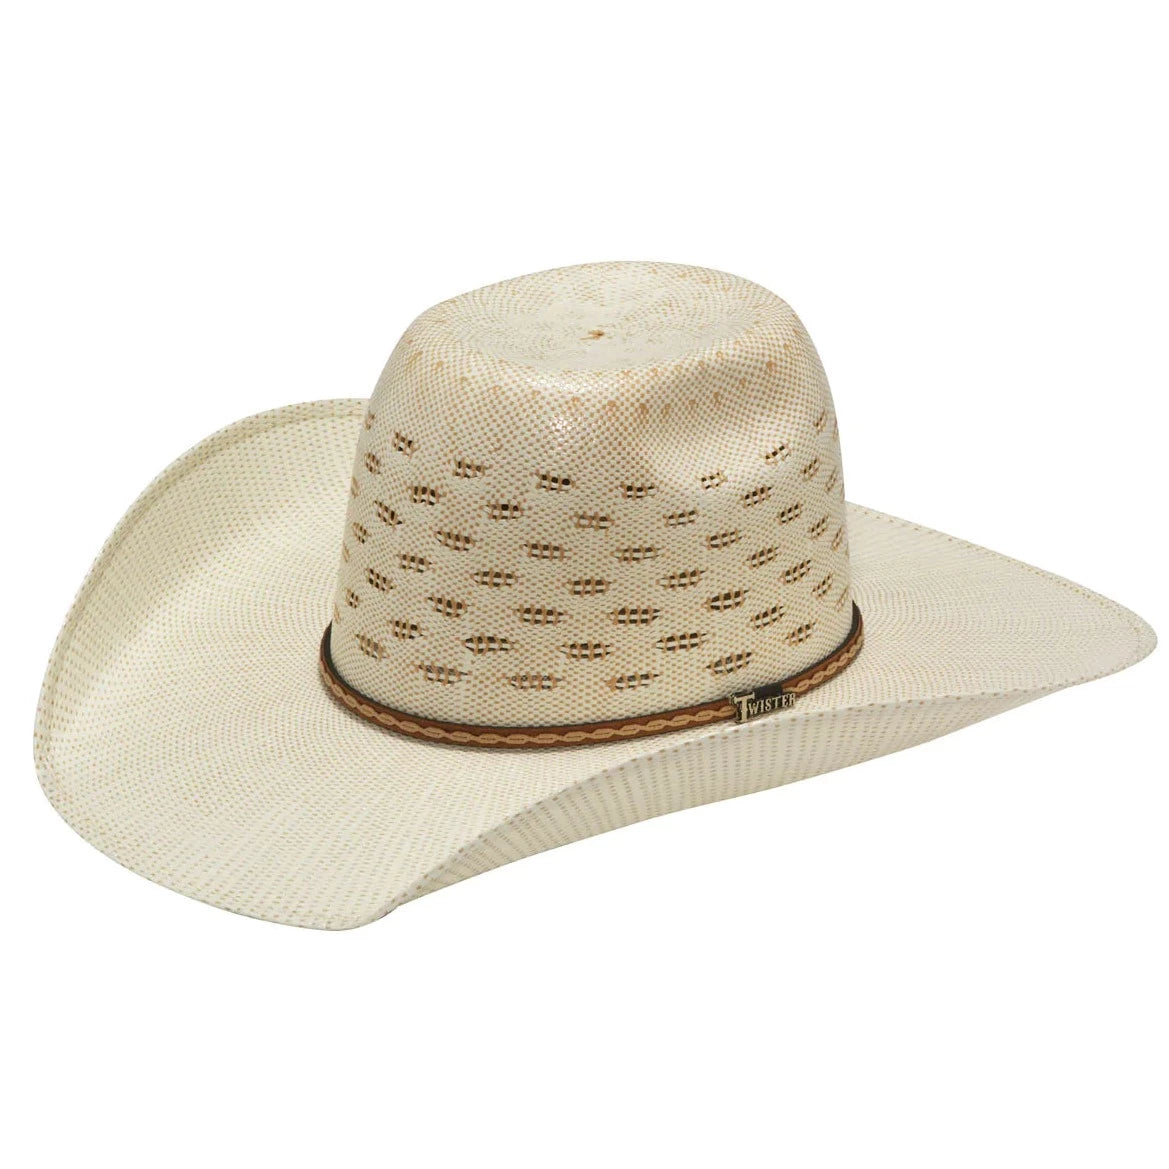 Twister Bangora Punchy Crown Straw Hat